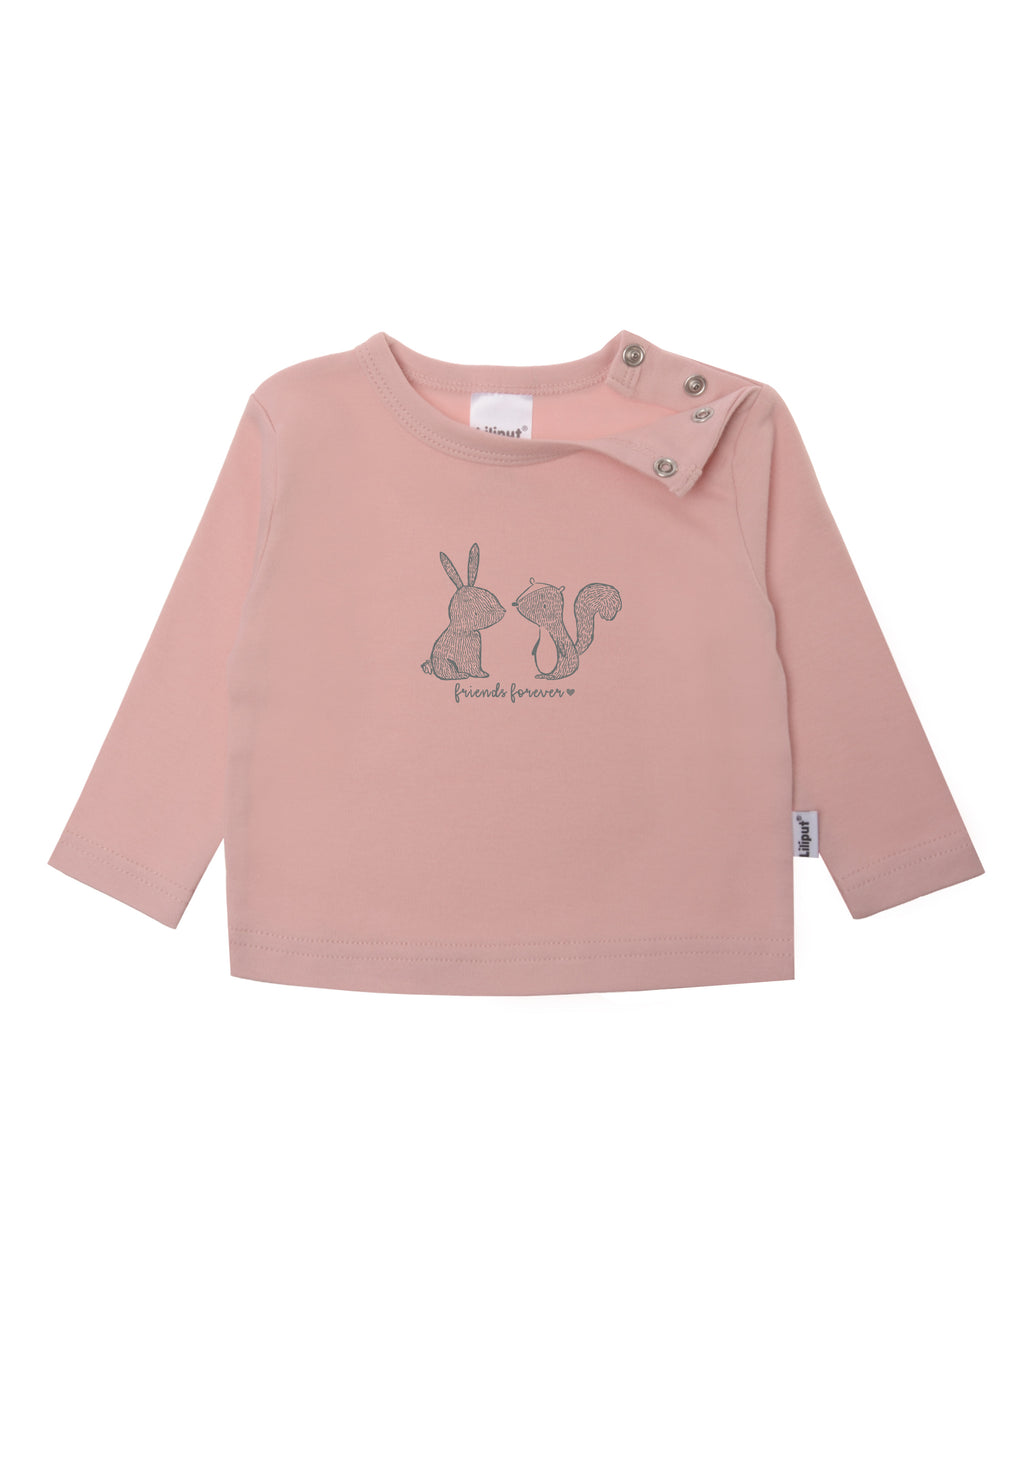 T-Shirts Langarmshirts Babykleidung und Liliput